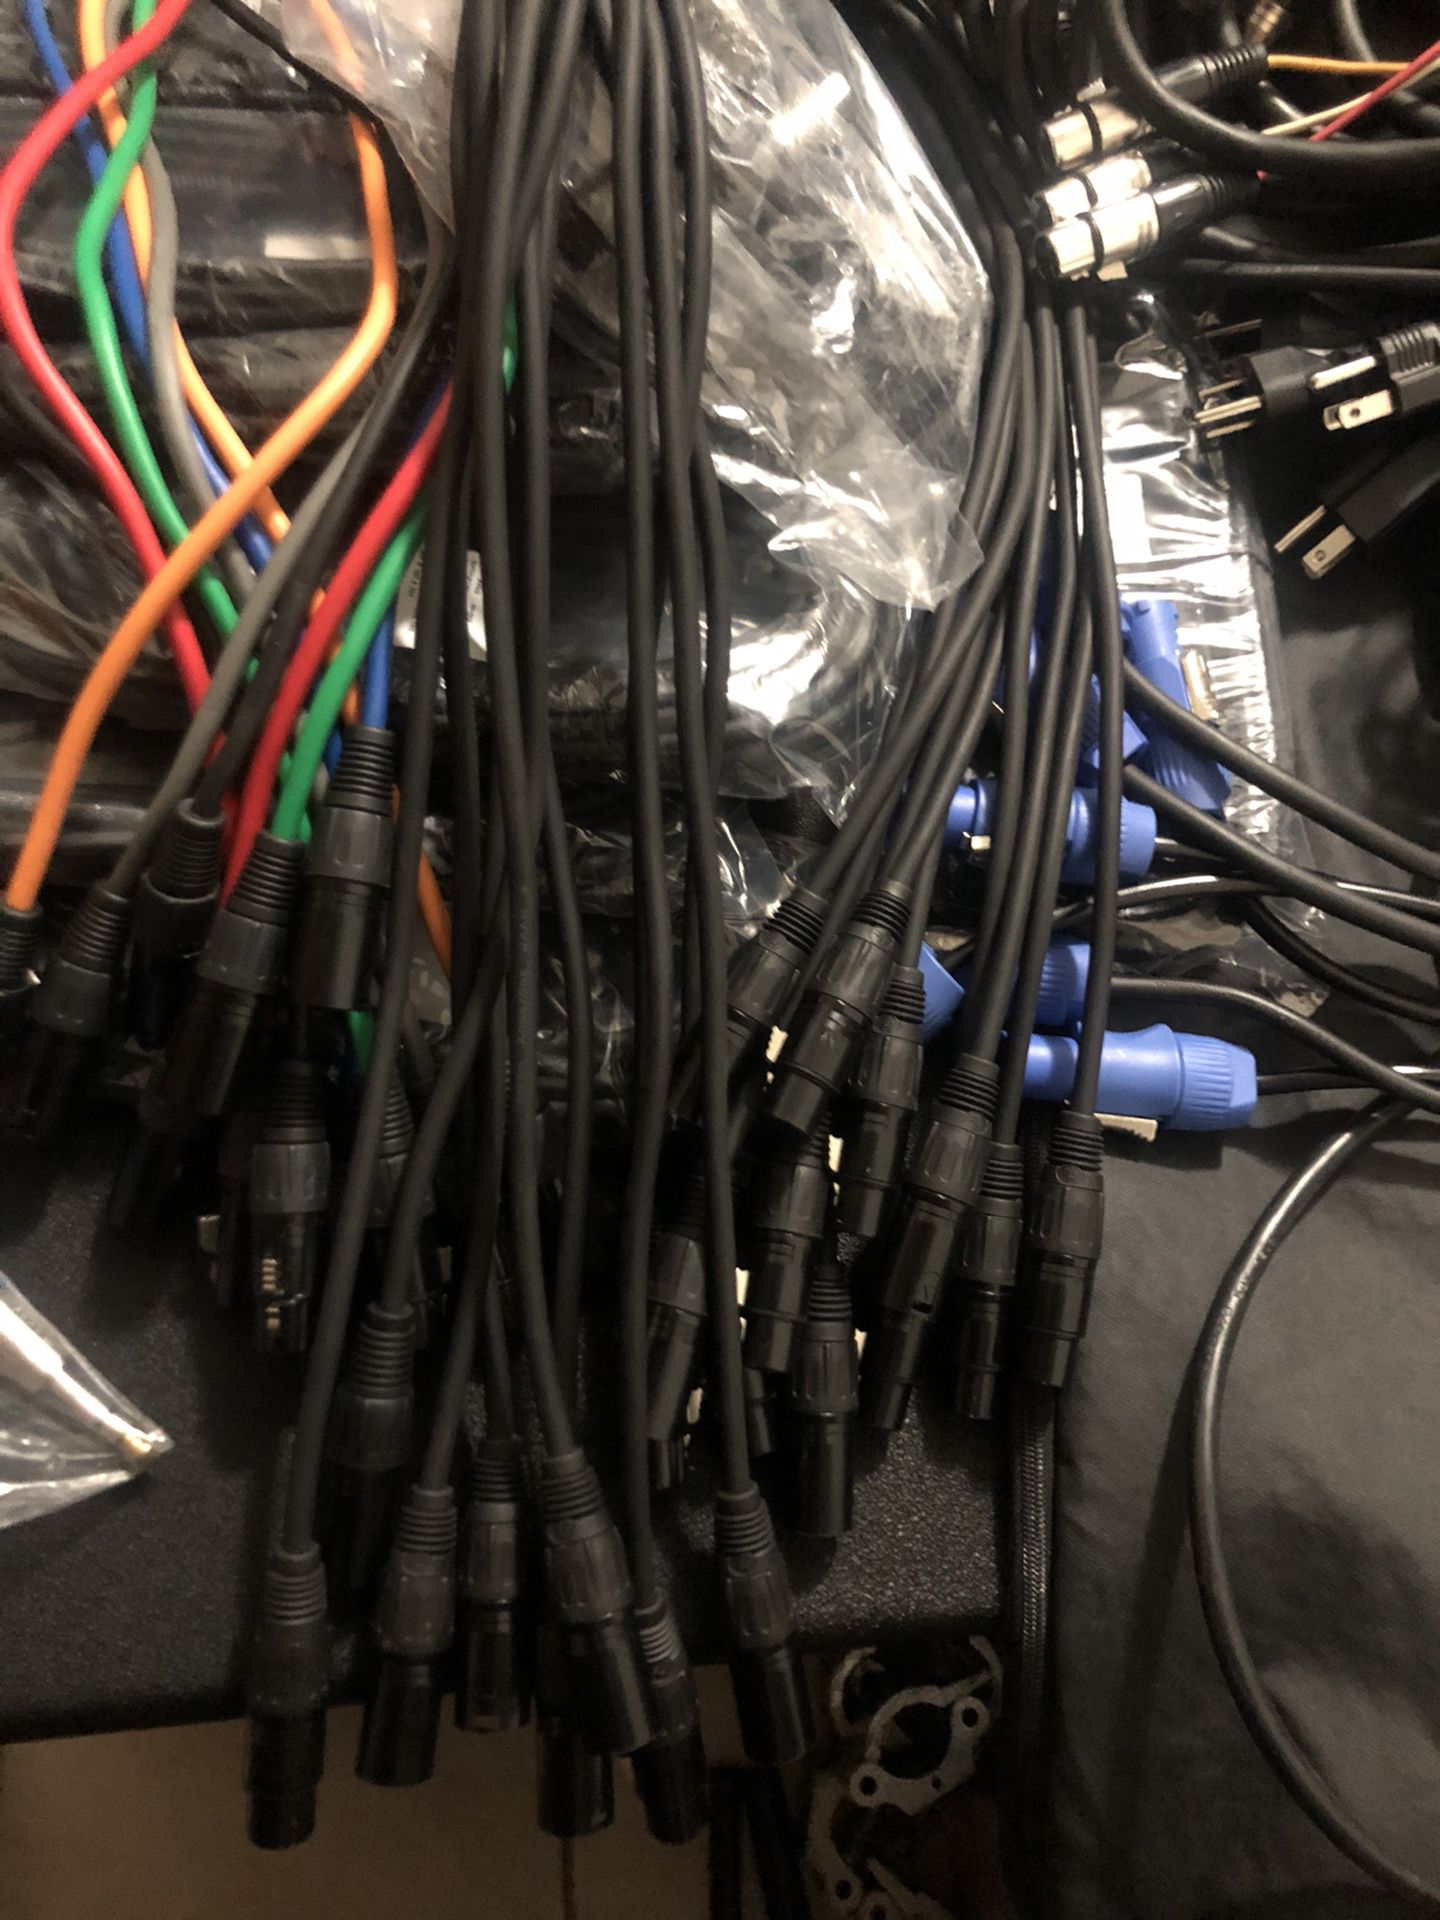 Xlr 25ft black connectors